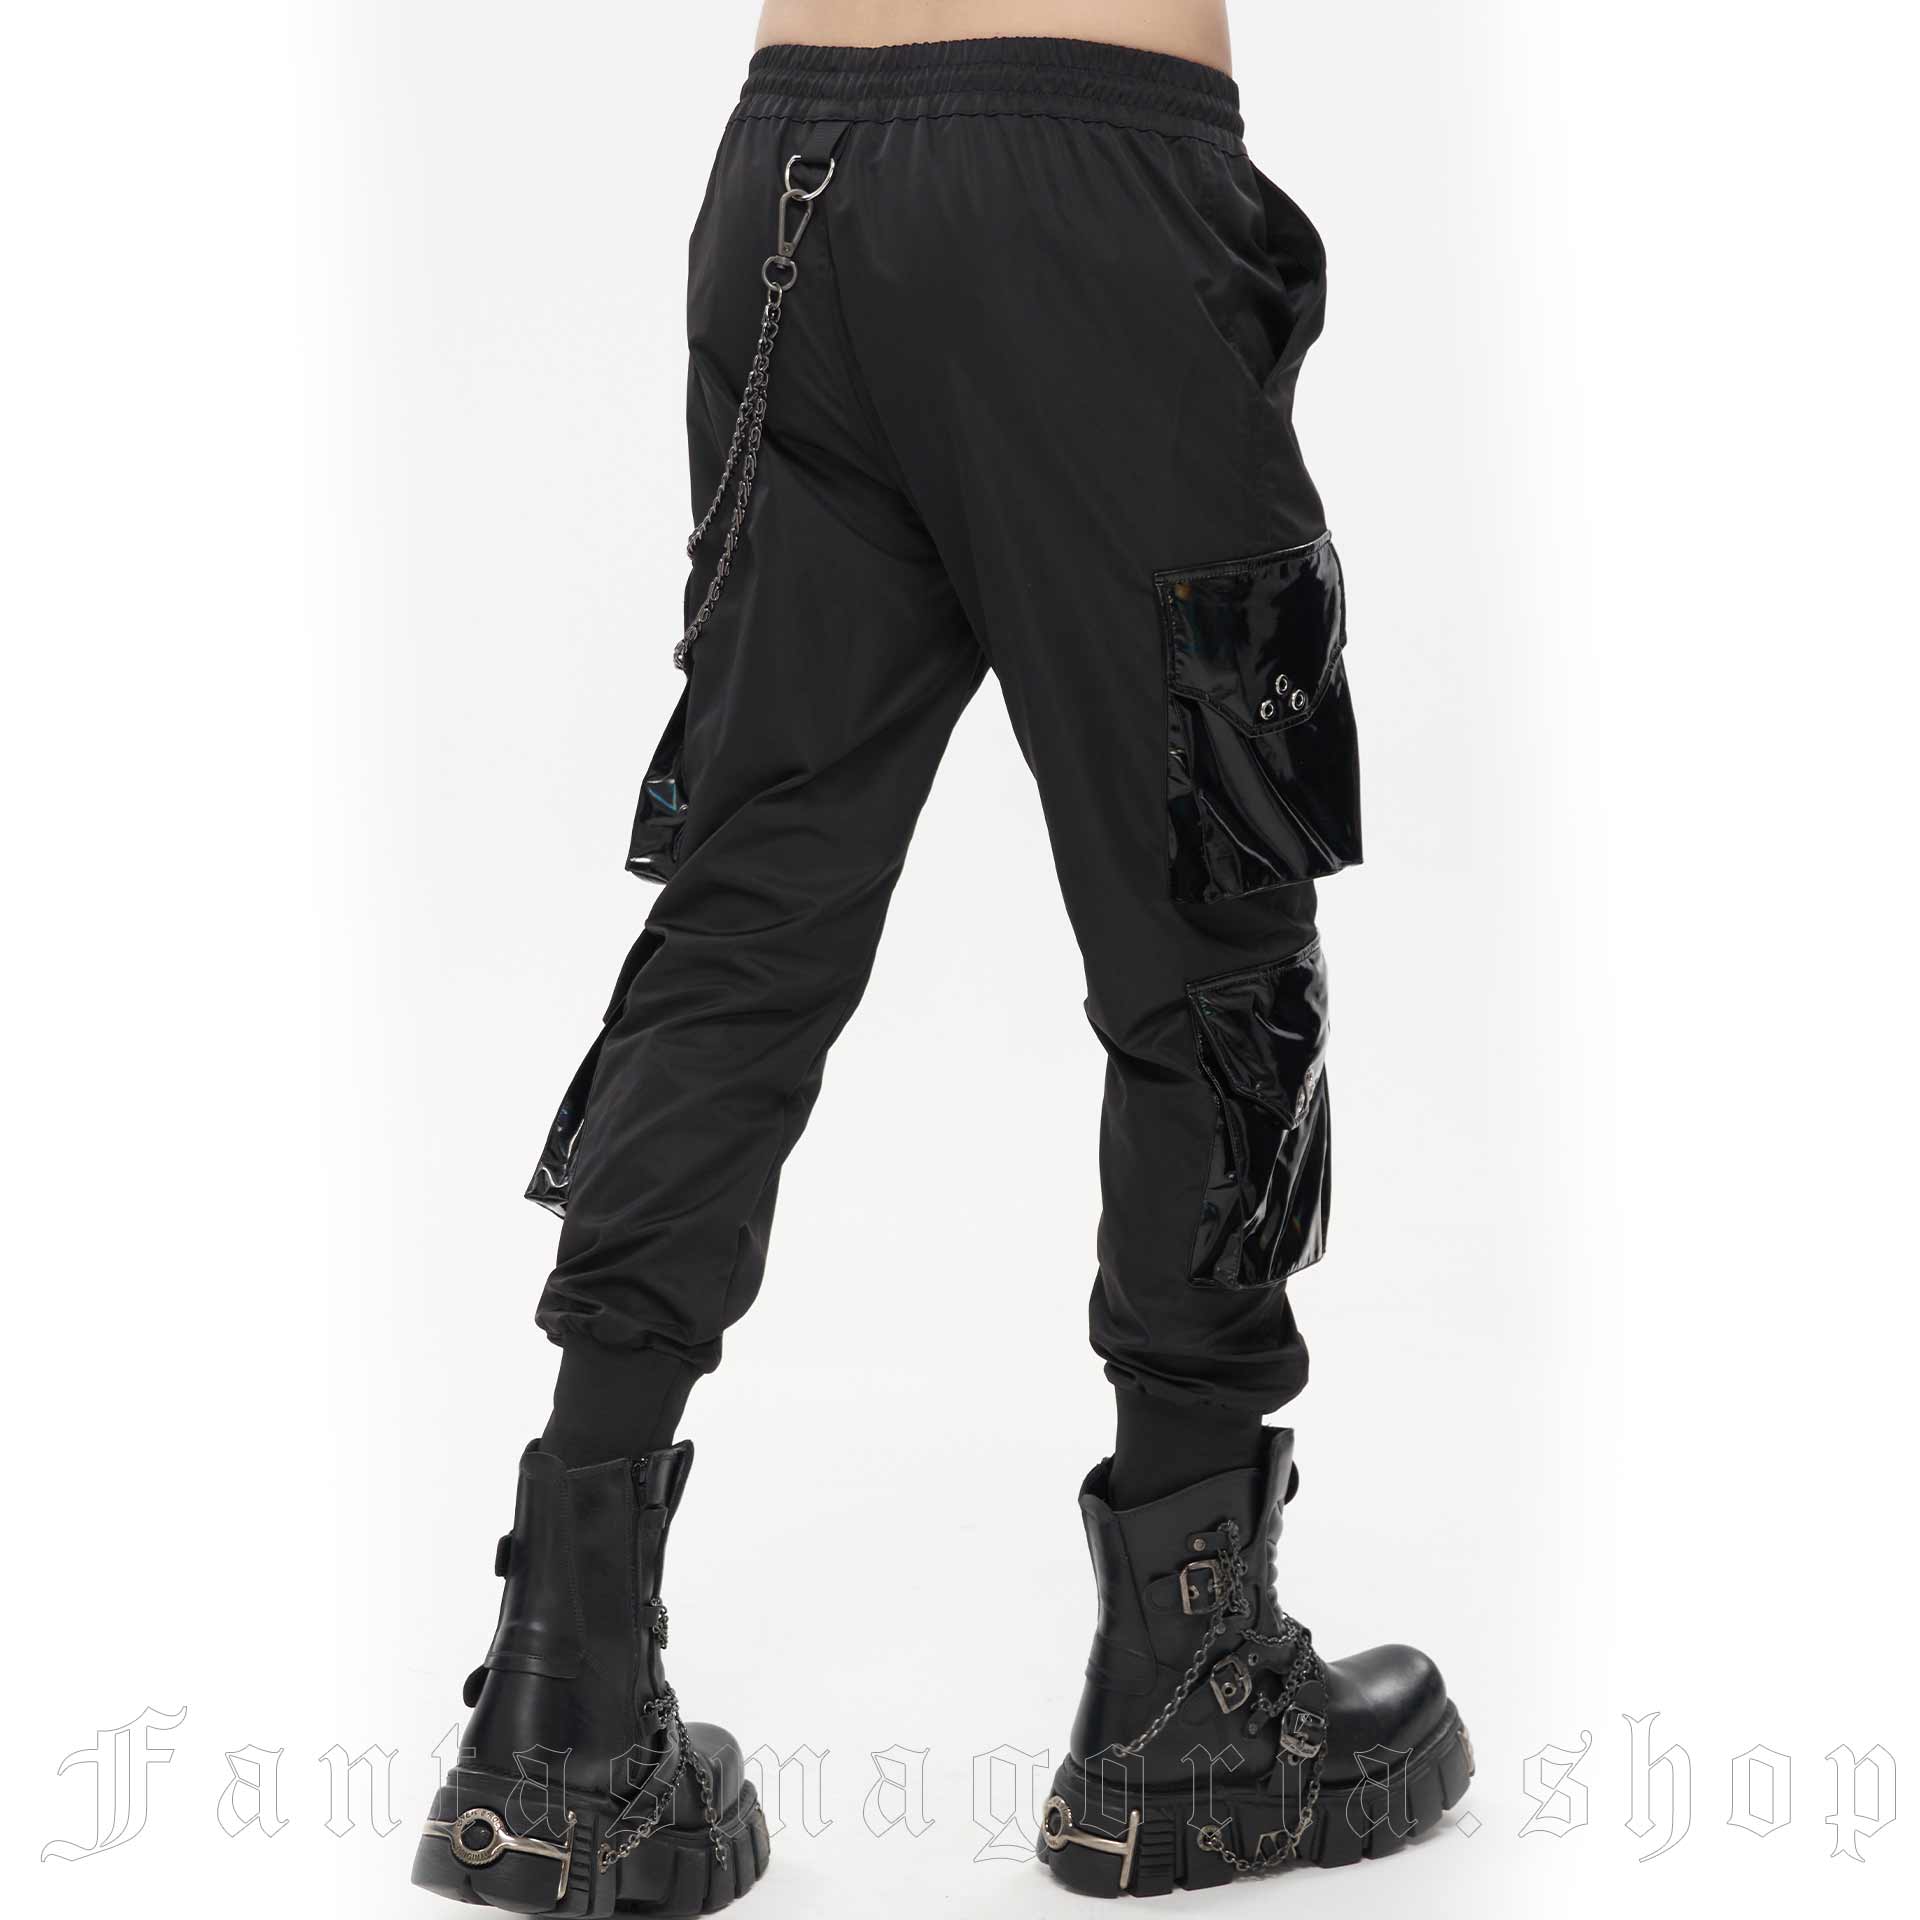 US BDU STYLE FIELD PANTS - BLACK BLACK | Apparel \ Pants \ Field Pants  Apparel \ Pants \ BDU Pants militarysurplus.eu | Army Navy Surplus -  Tactical | Big variety -